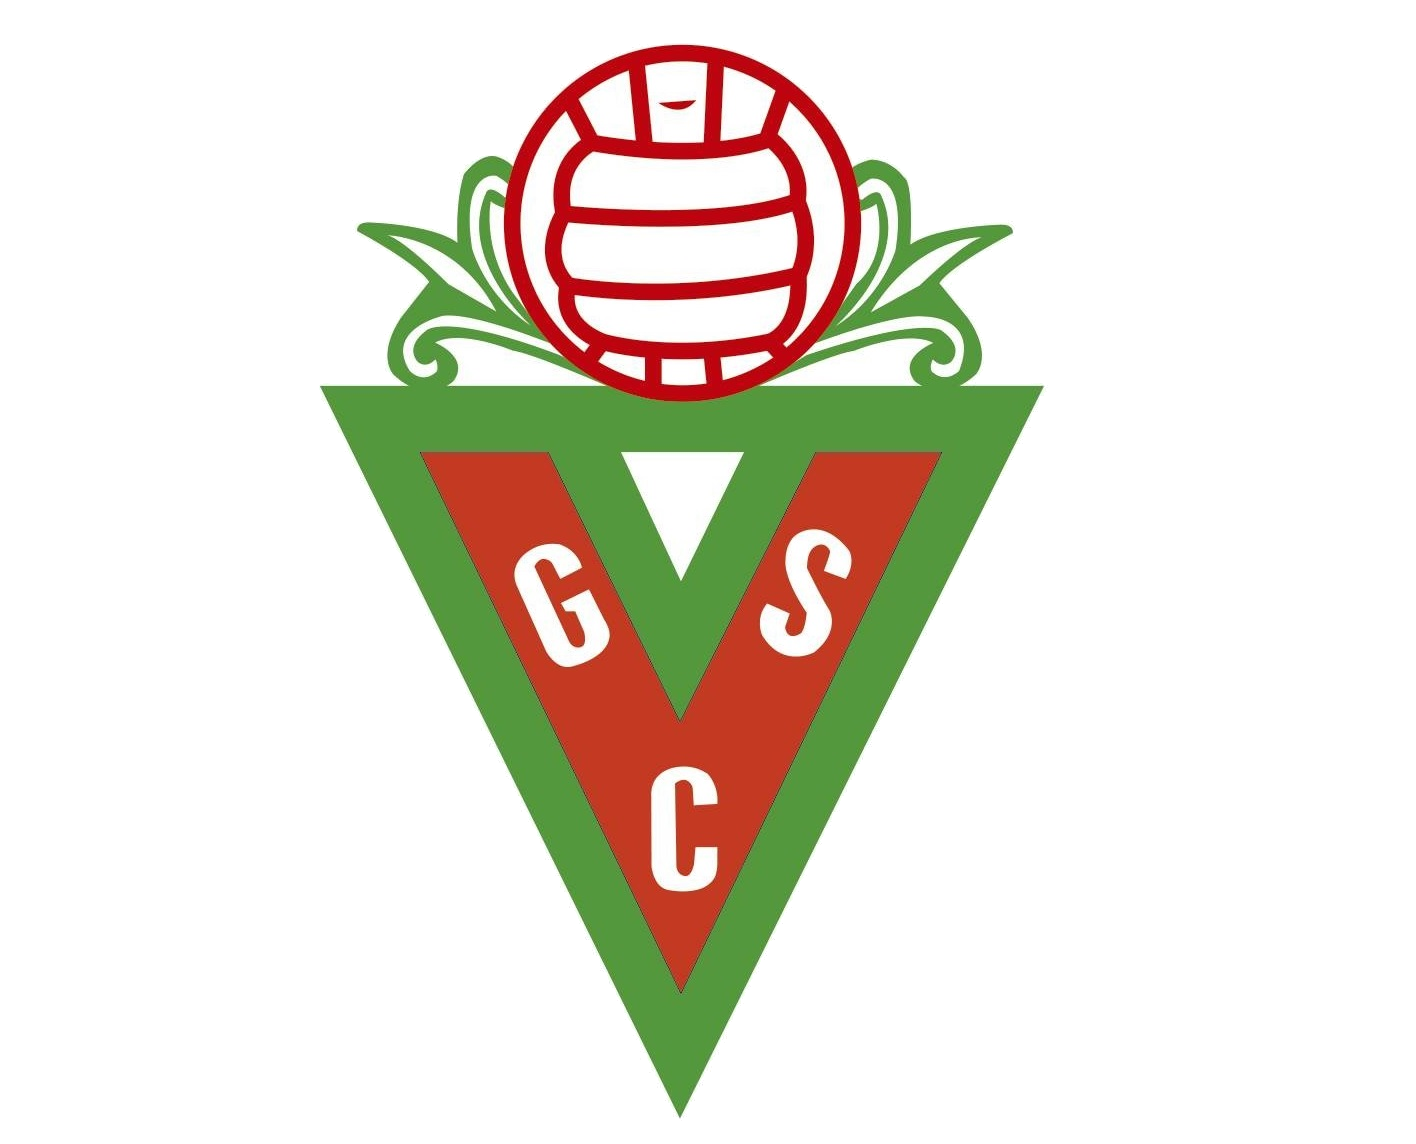 Gens Sport Clube